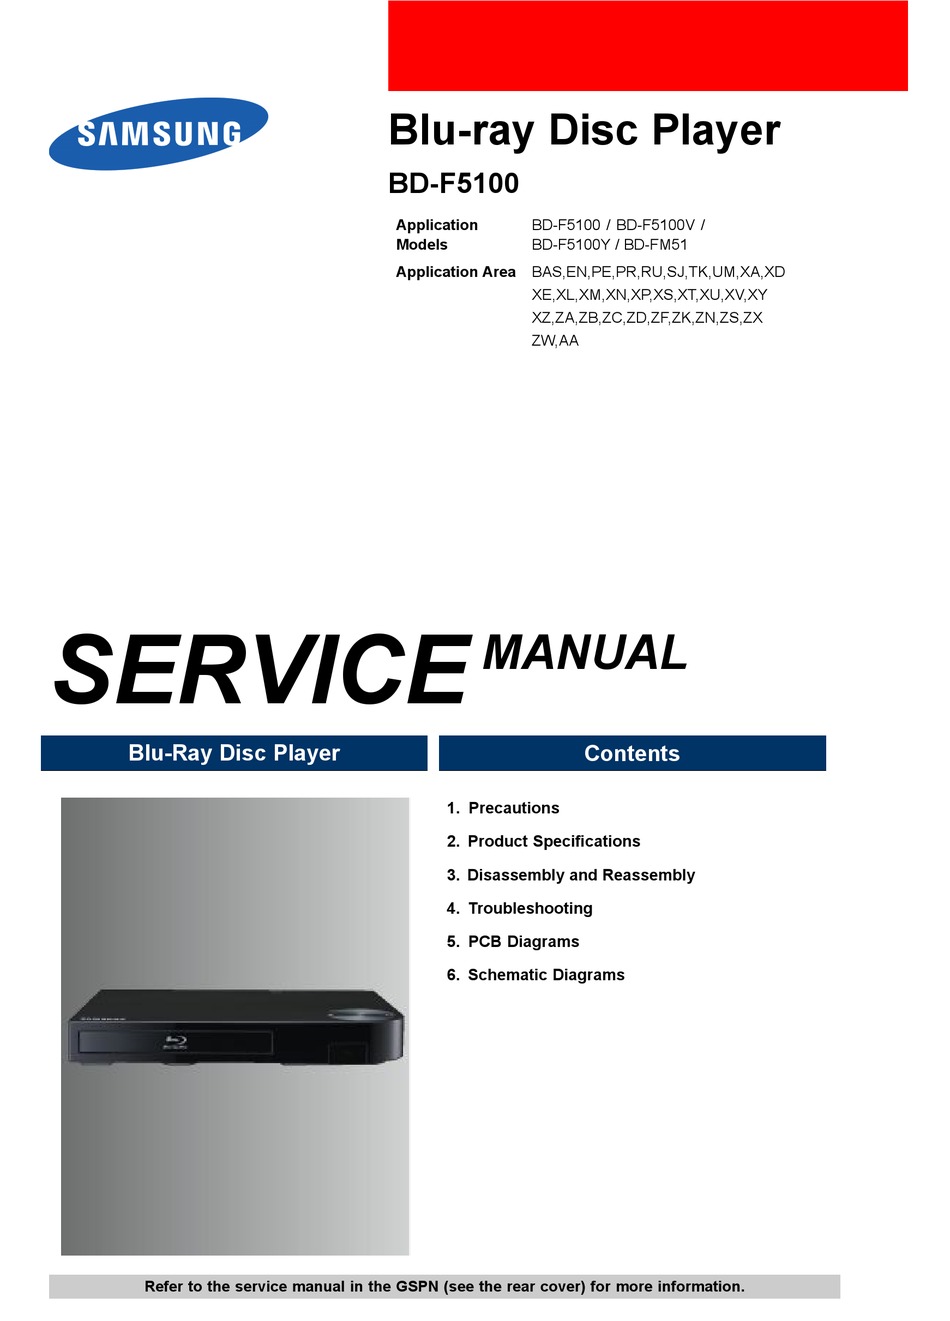 SAMSUNG BD-F5100 SERVICE MANUAL Pdf Download | ManualsLib